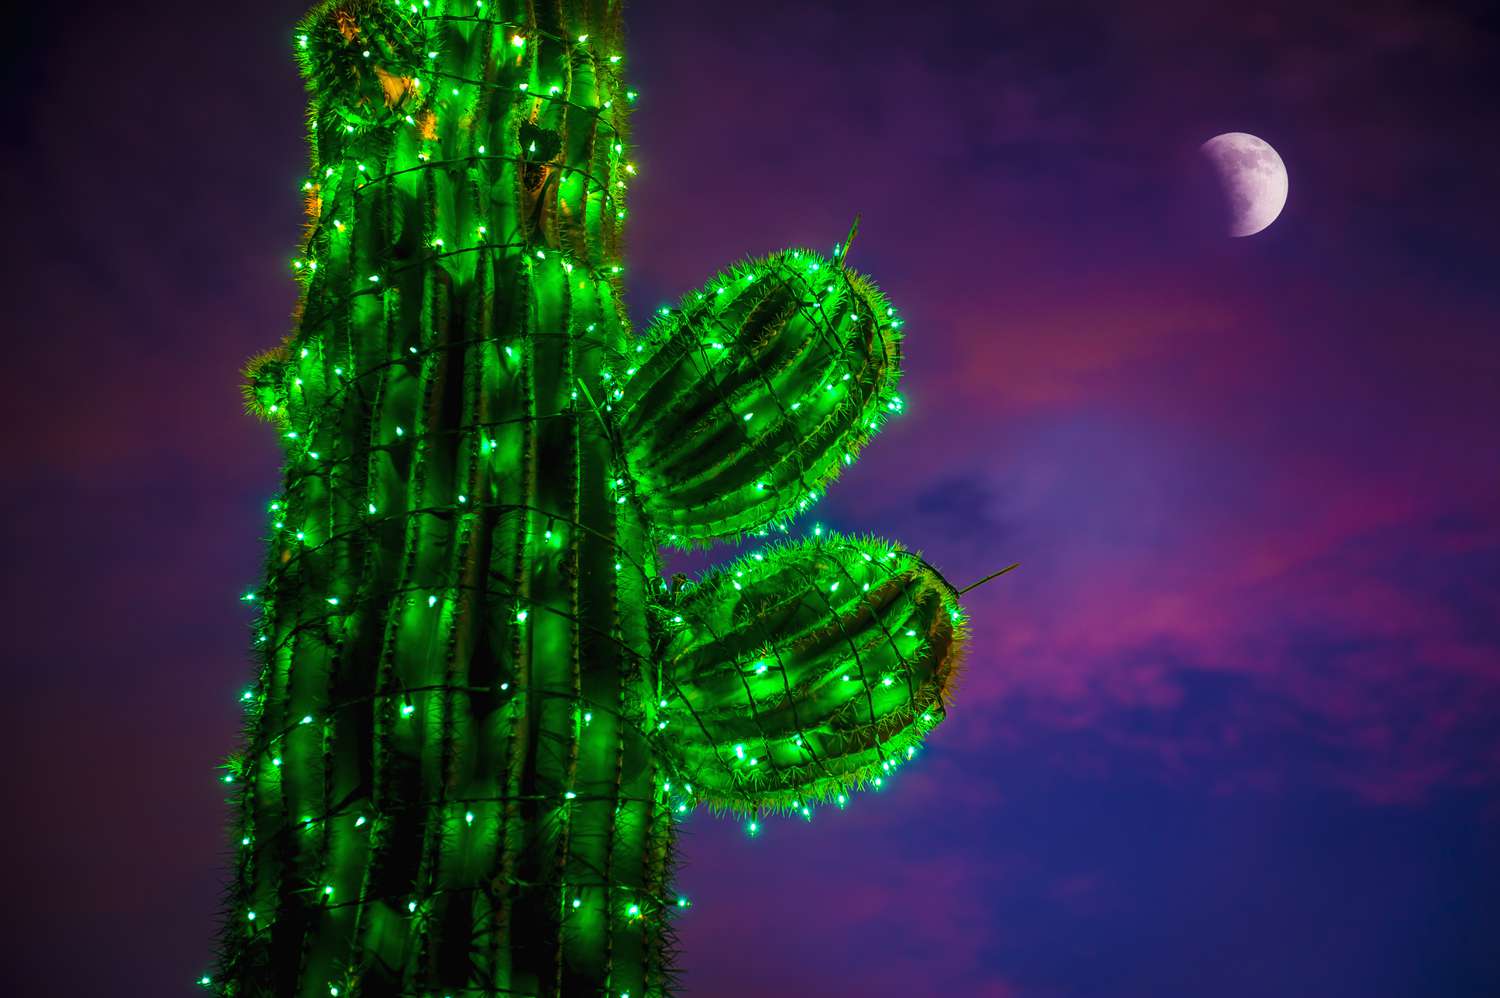 Cactus at Christmas